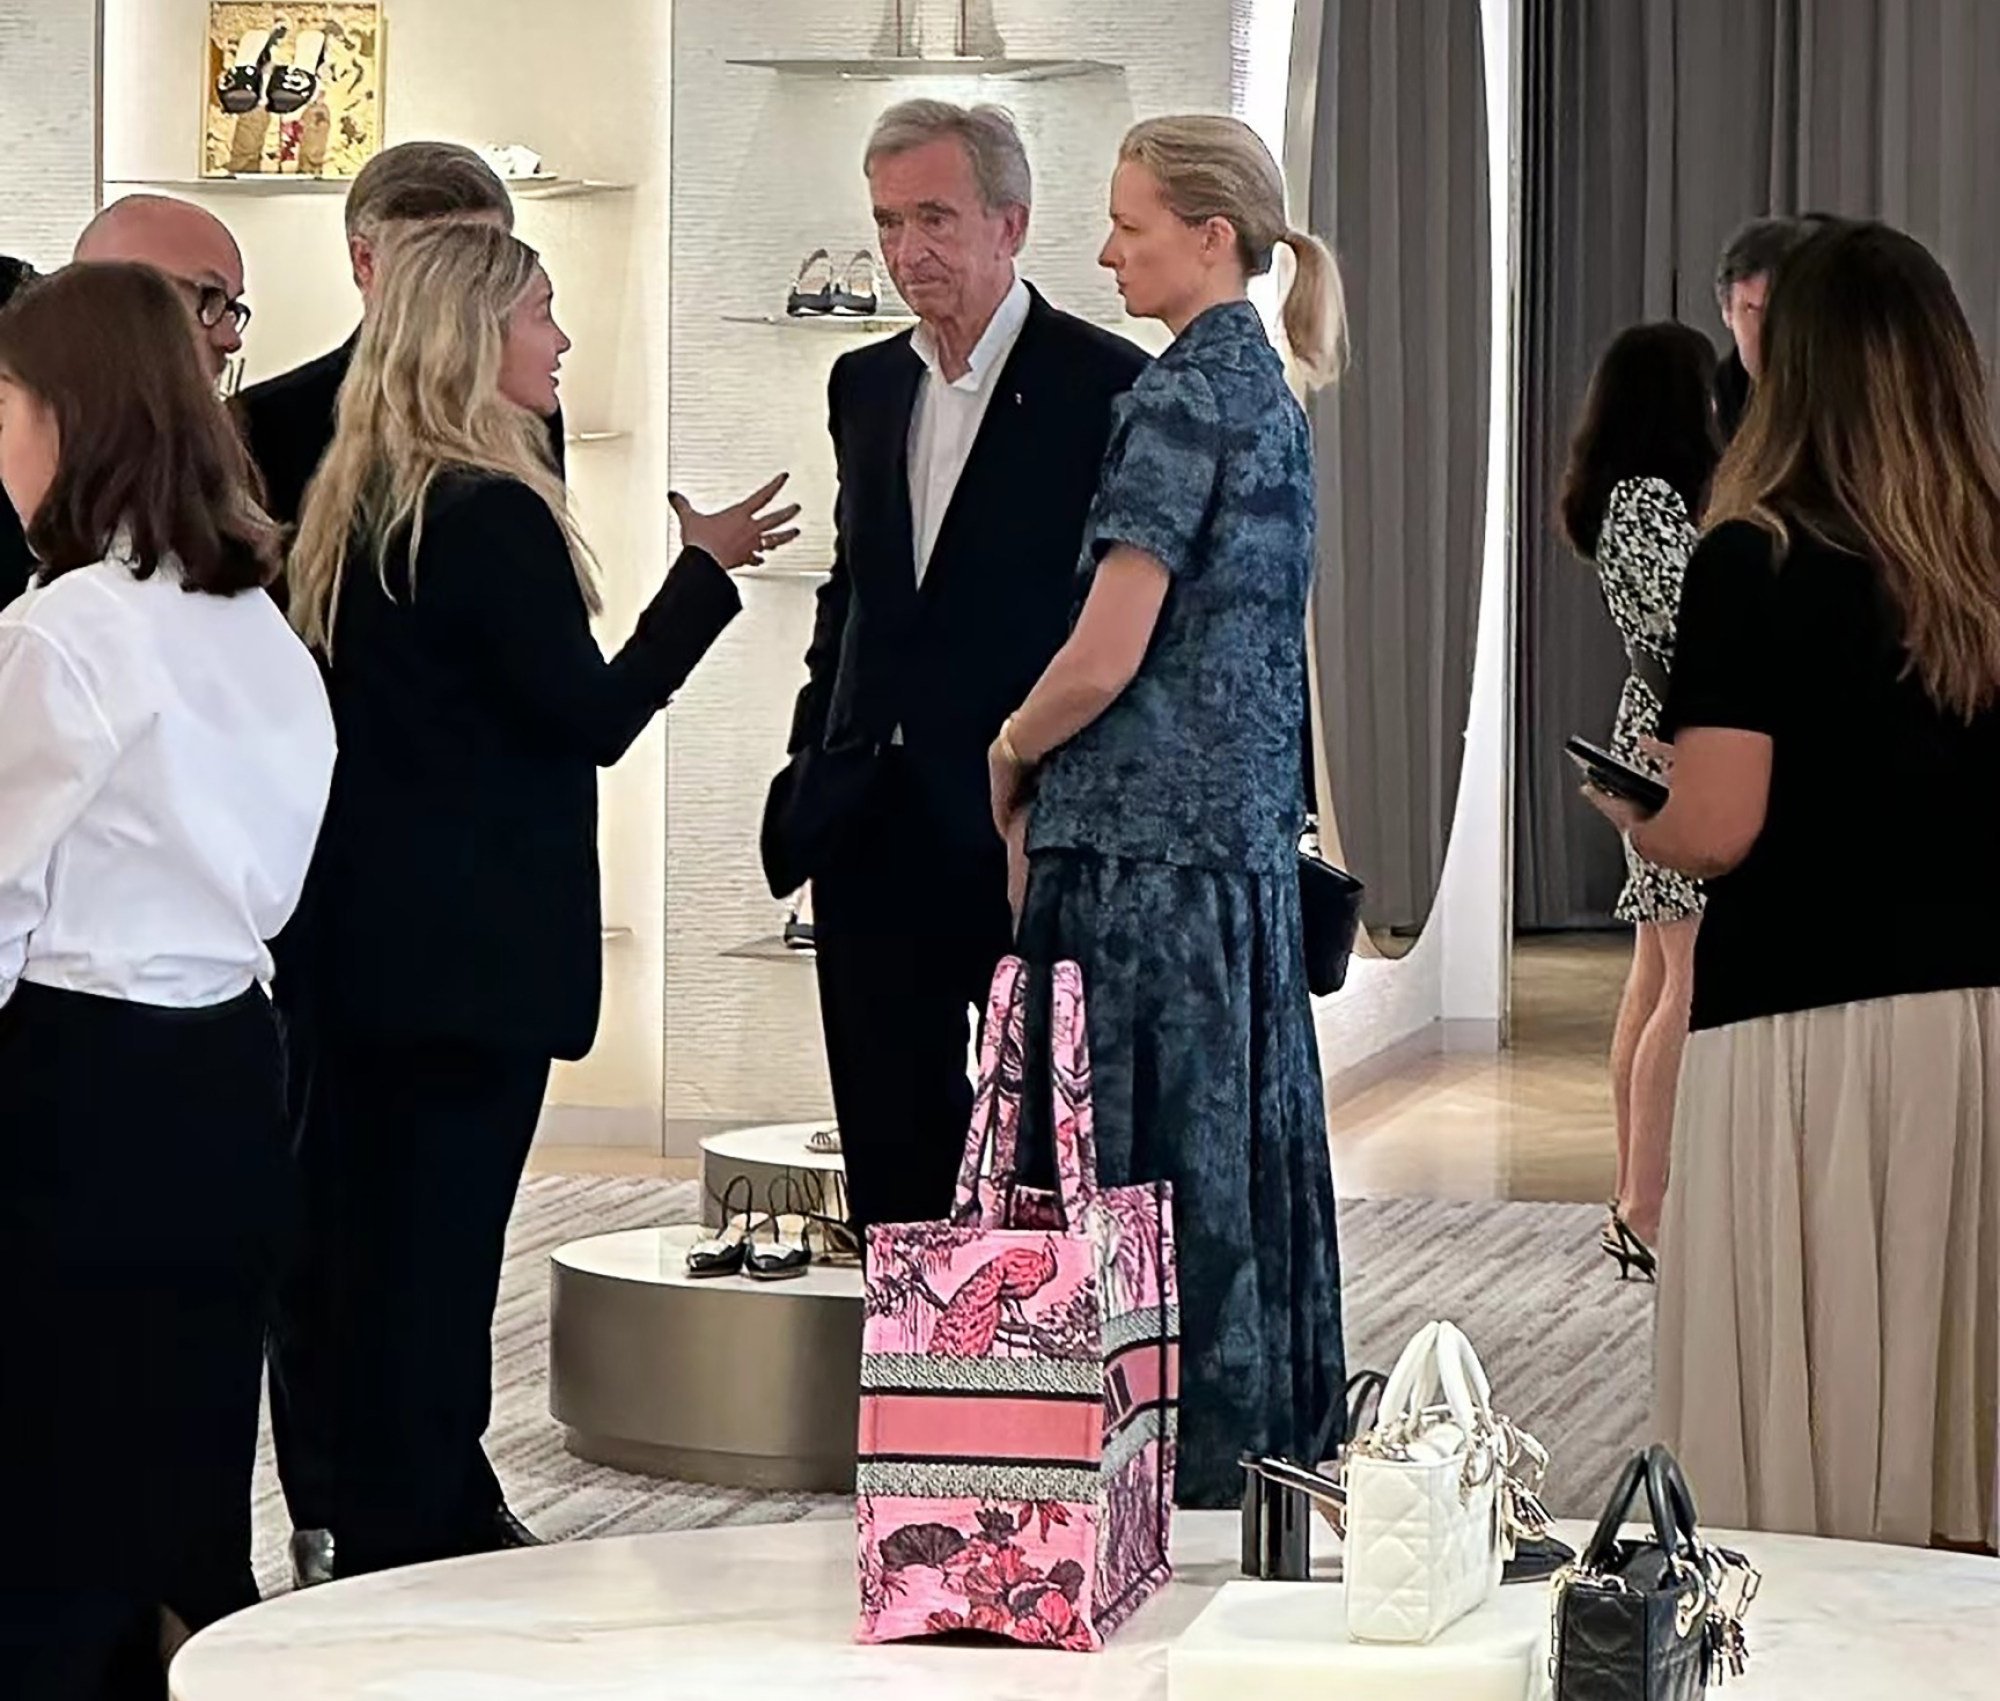 LVMH owner Bernard Arnault visits China after luxury spending